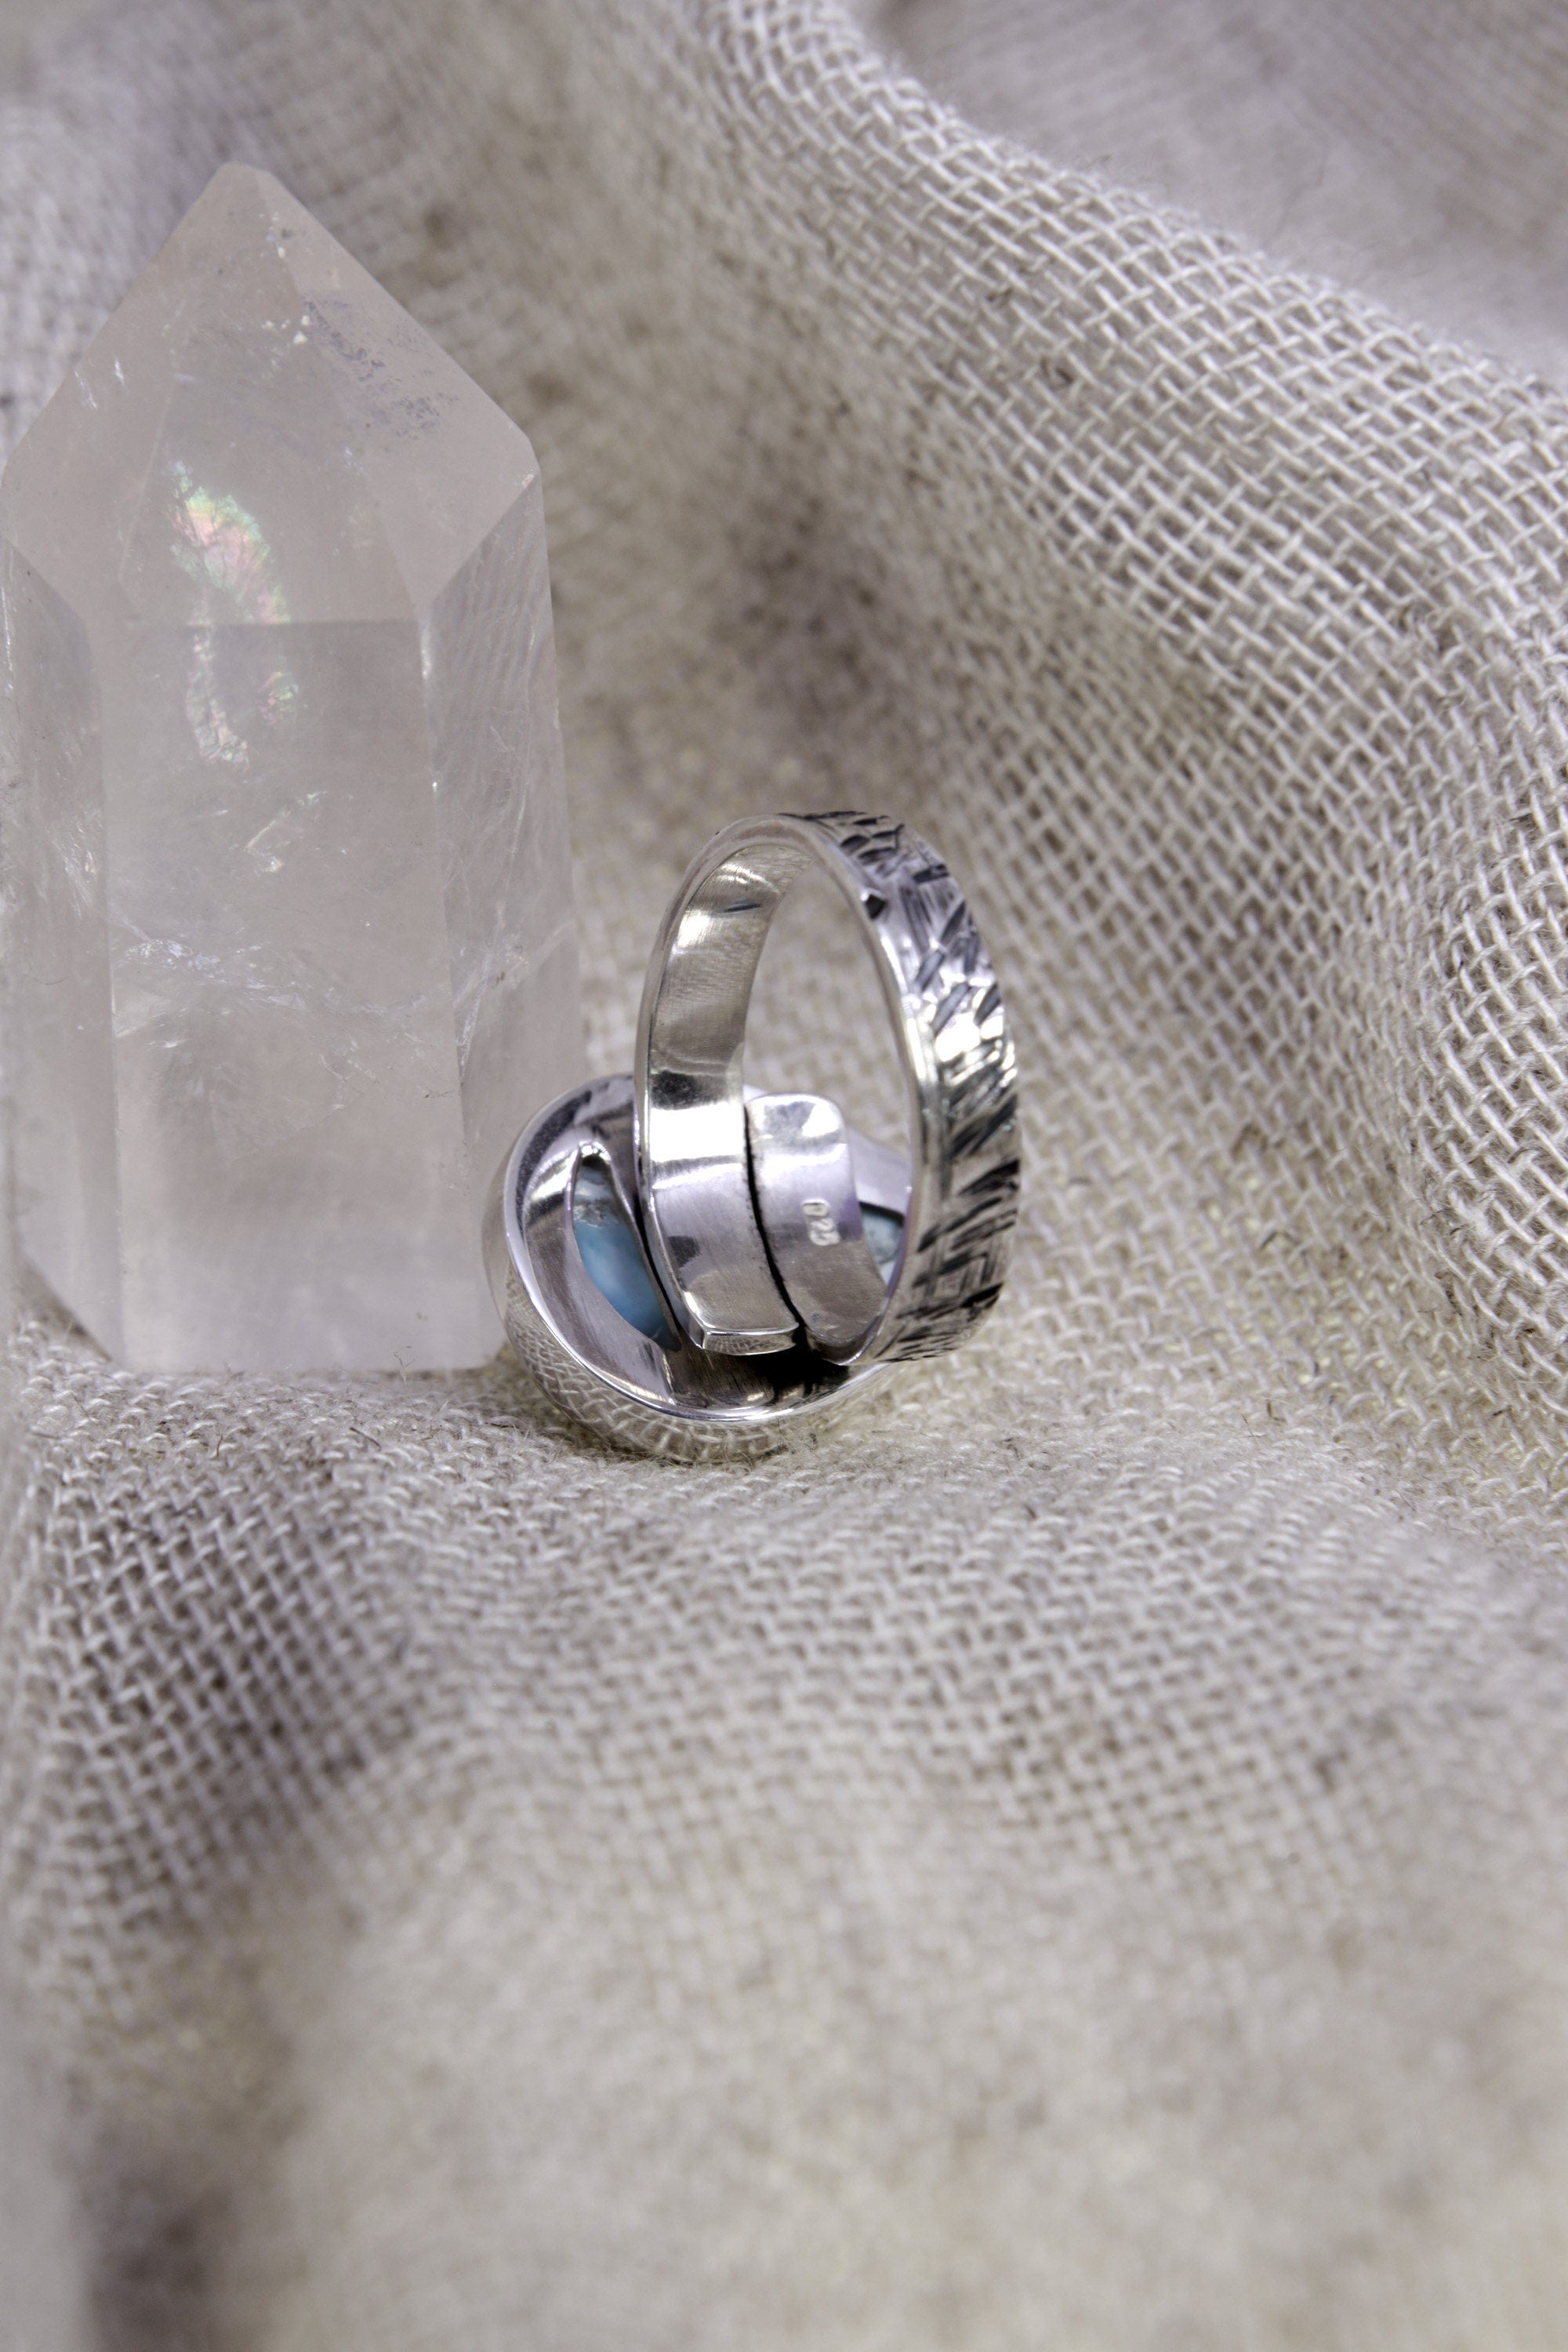 Ocean's Embrace: Adjustable Sterling Silver Ring with Teardrop Larimar - Unisex - Size 5-12 US